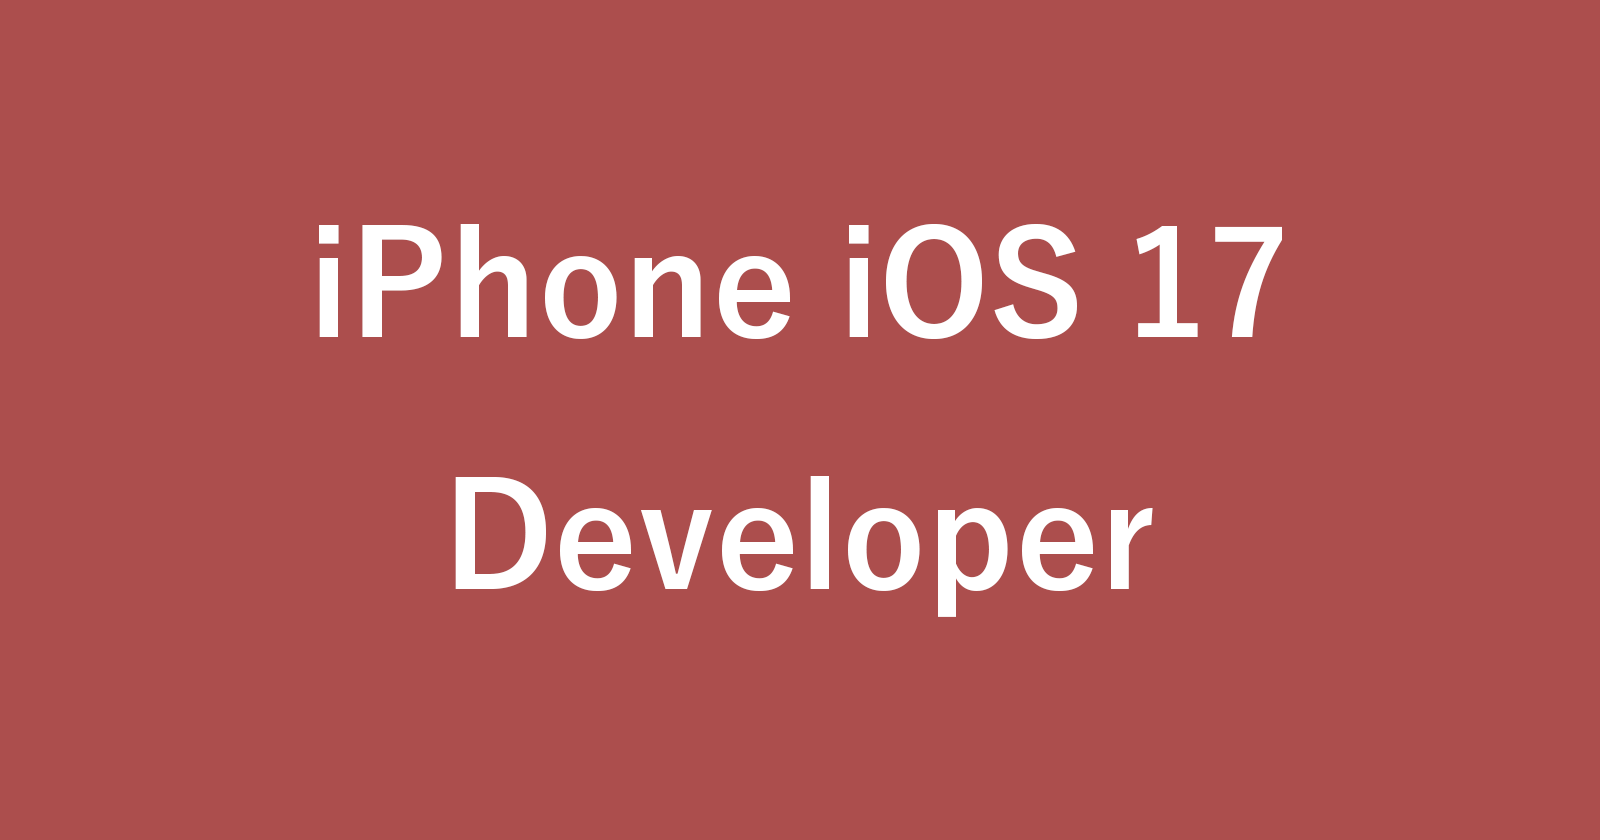 iphone ios 17 developer